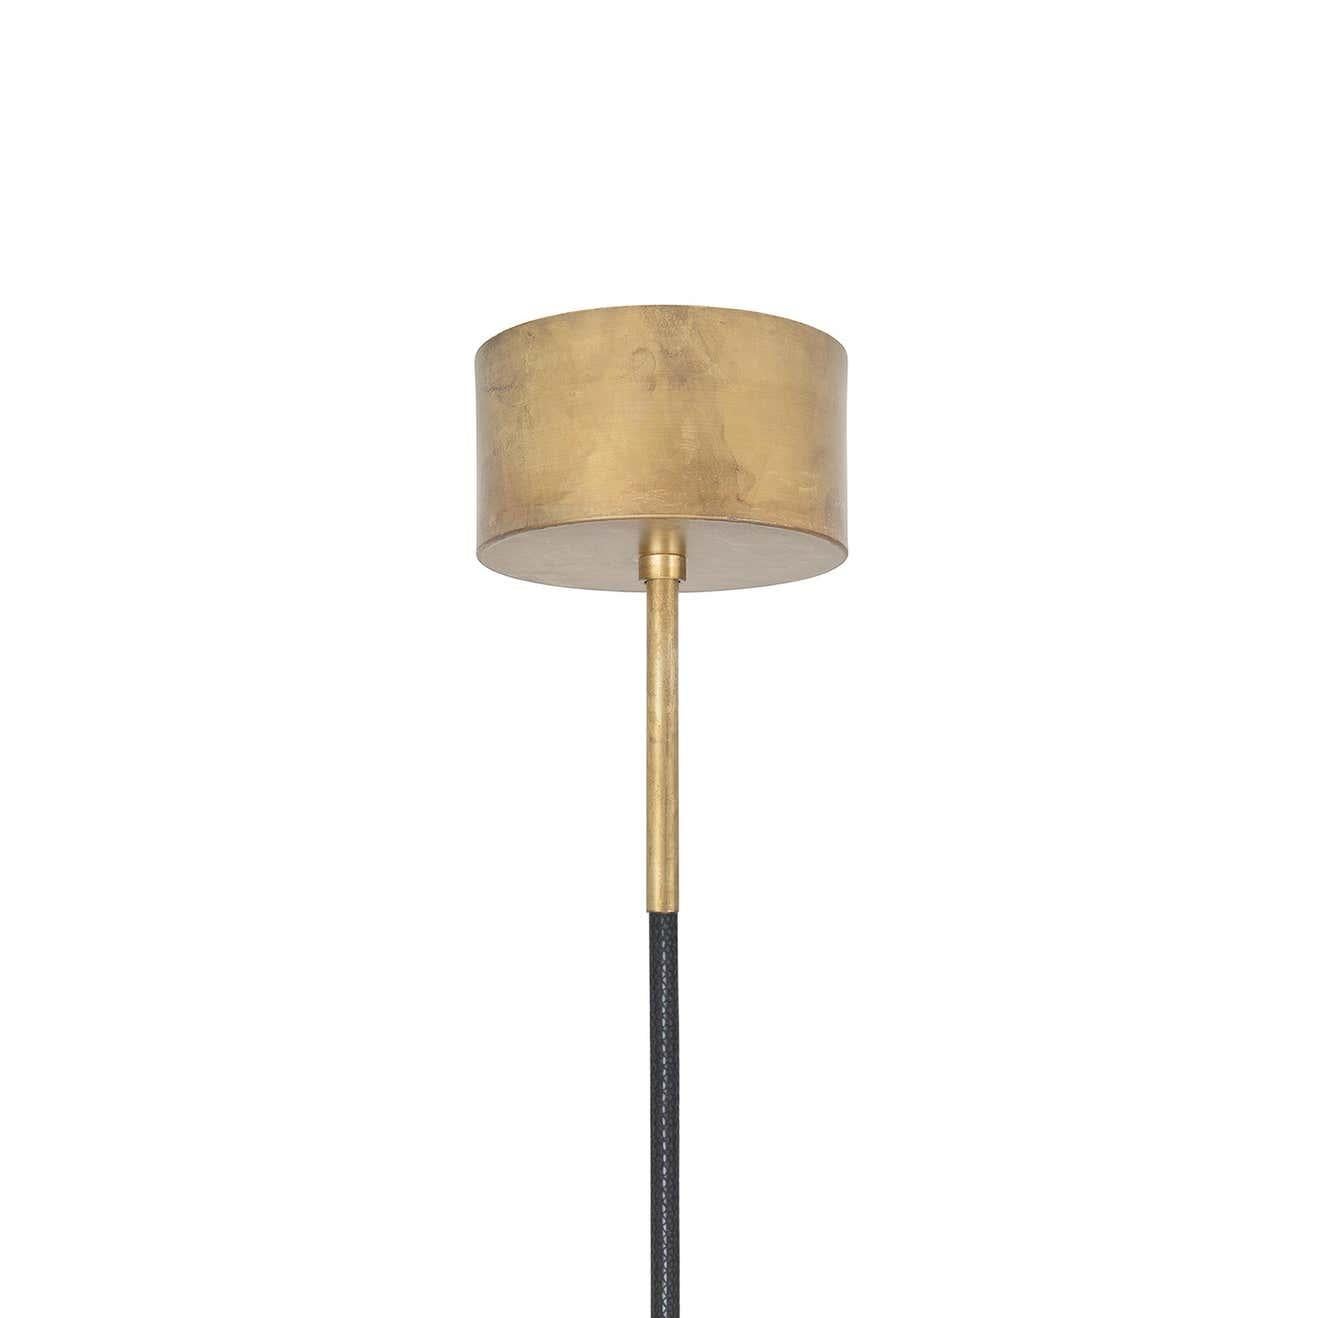 Johan Carpner Klyfta Small Raw Brass Ceiling Lamp by Konsthantverk In New Condition For Sale In Barcelona, Barcelona